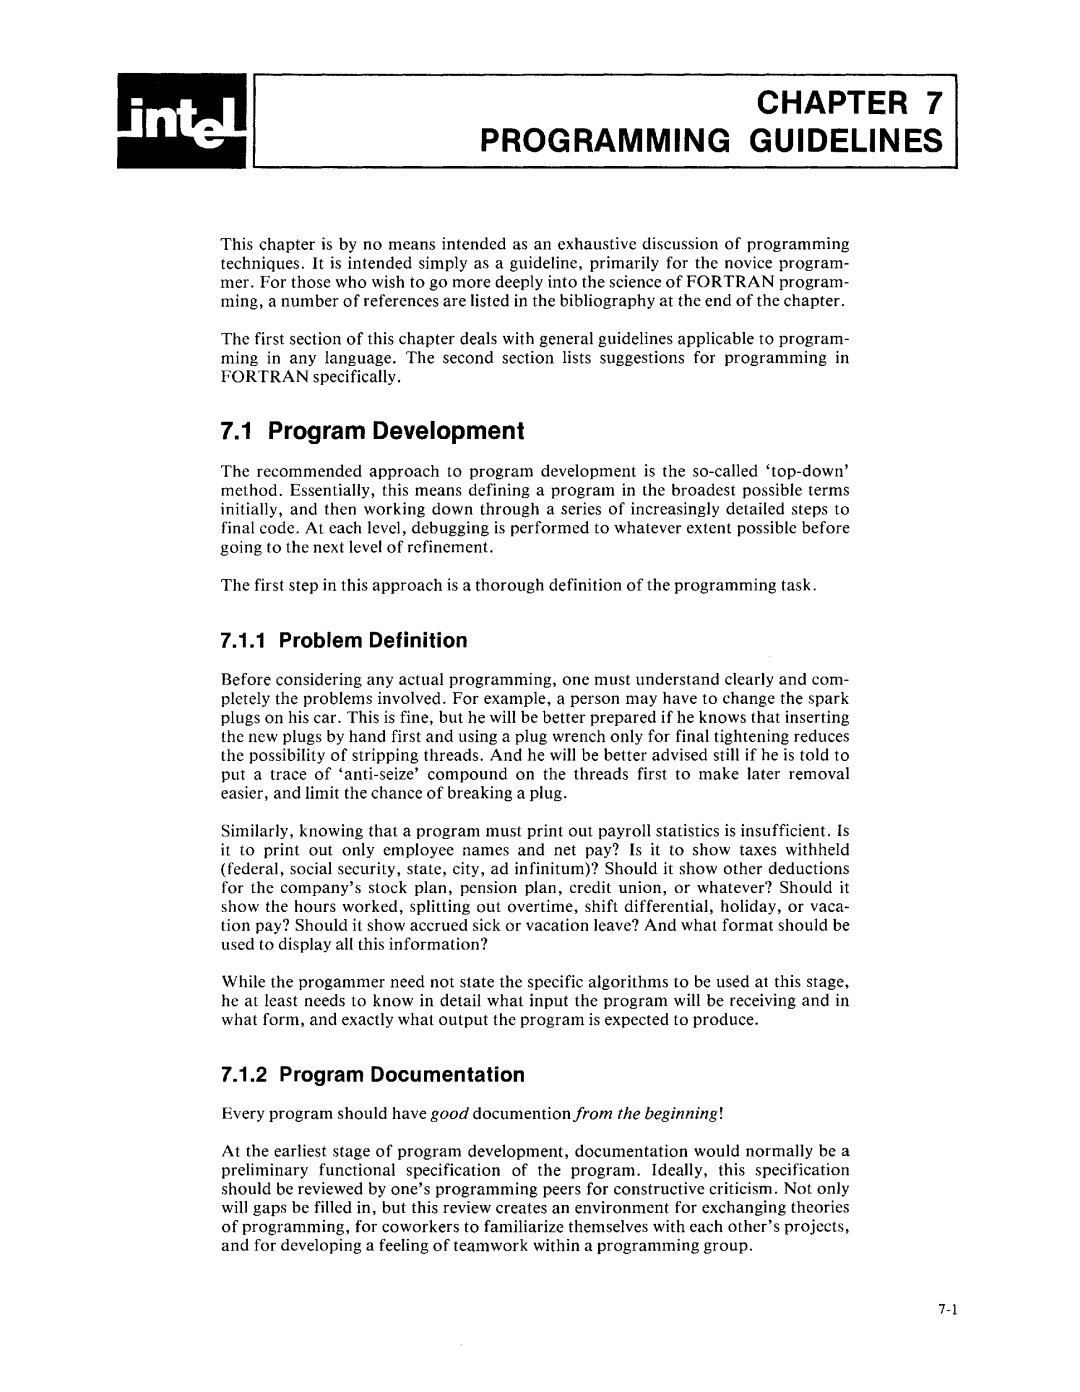 Intel fortran-80 manual Chapter Programming Guidelines, Program Development, Problem Definition, Program Documentation 